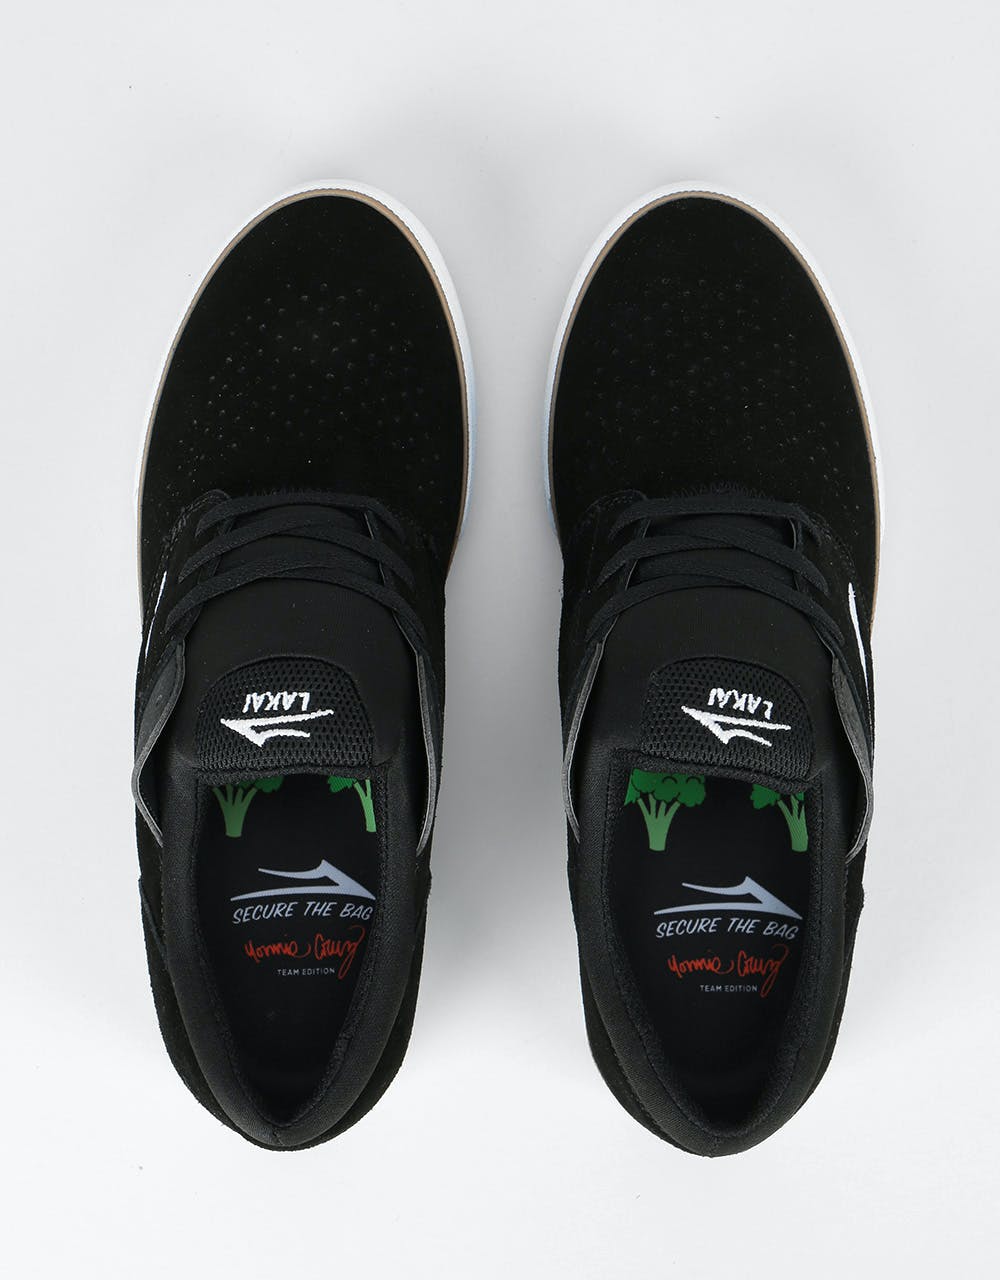 Lakai Fremont Vulc Skate Shoes - Black Suede